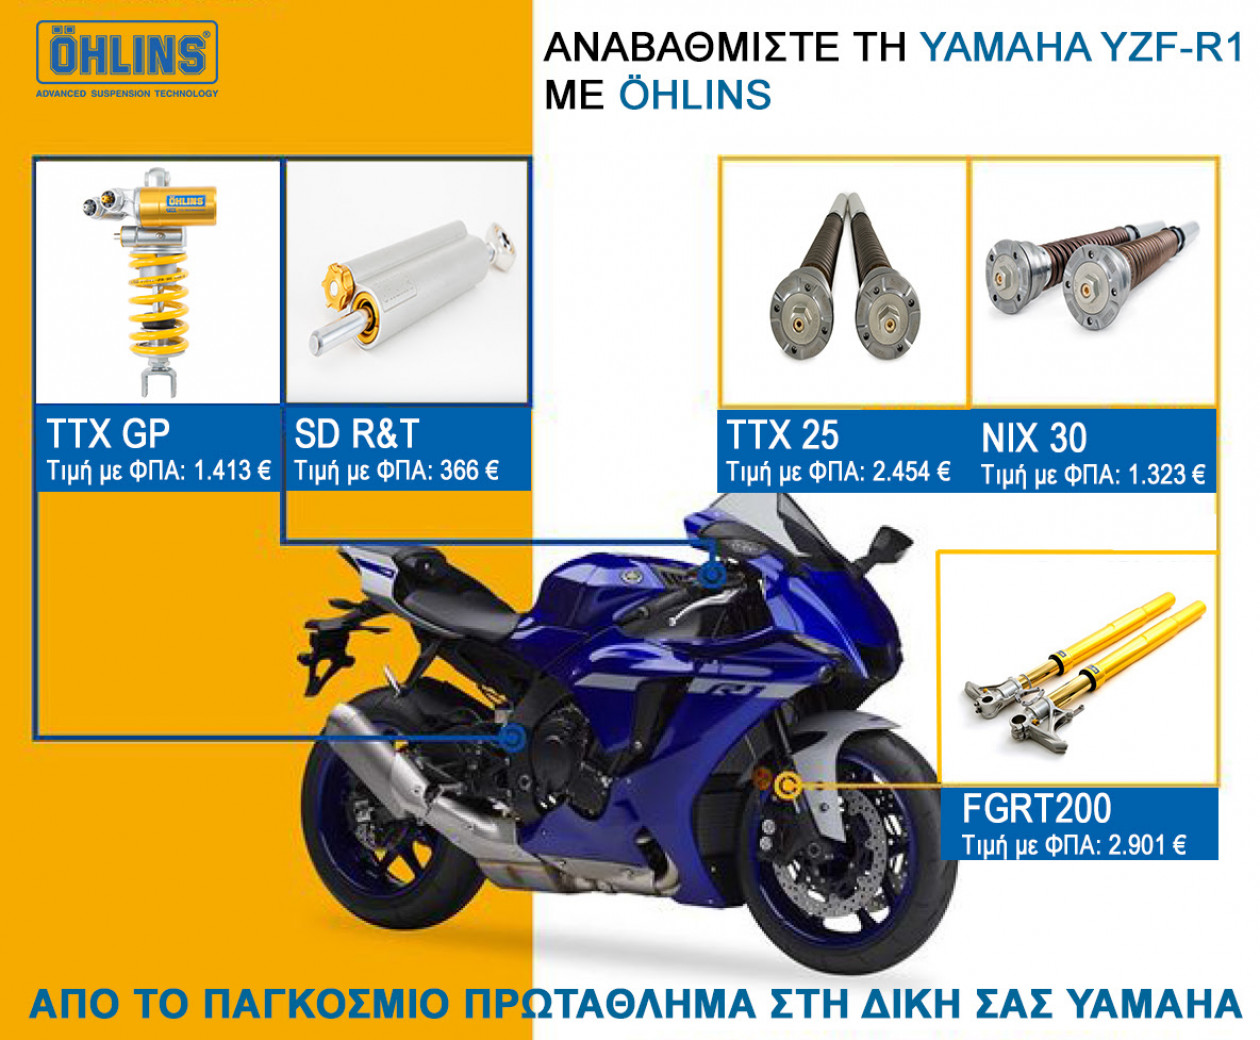 Öhlins για Yamaha YZF-R1 – Πλήρης σειρά επιλογών, από την extra products